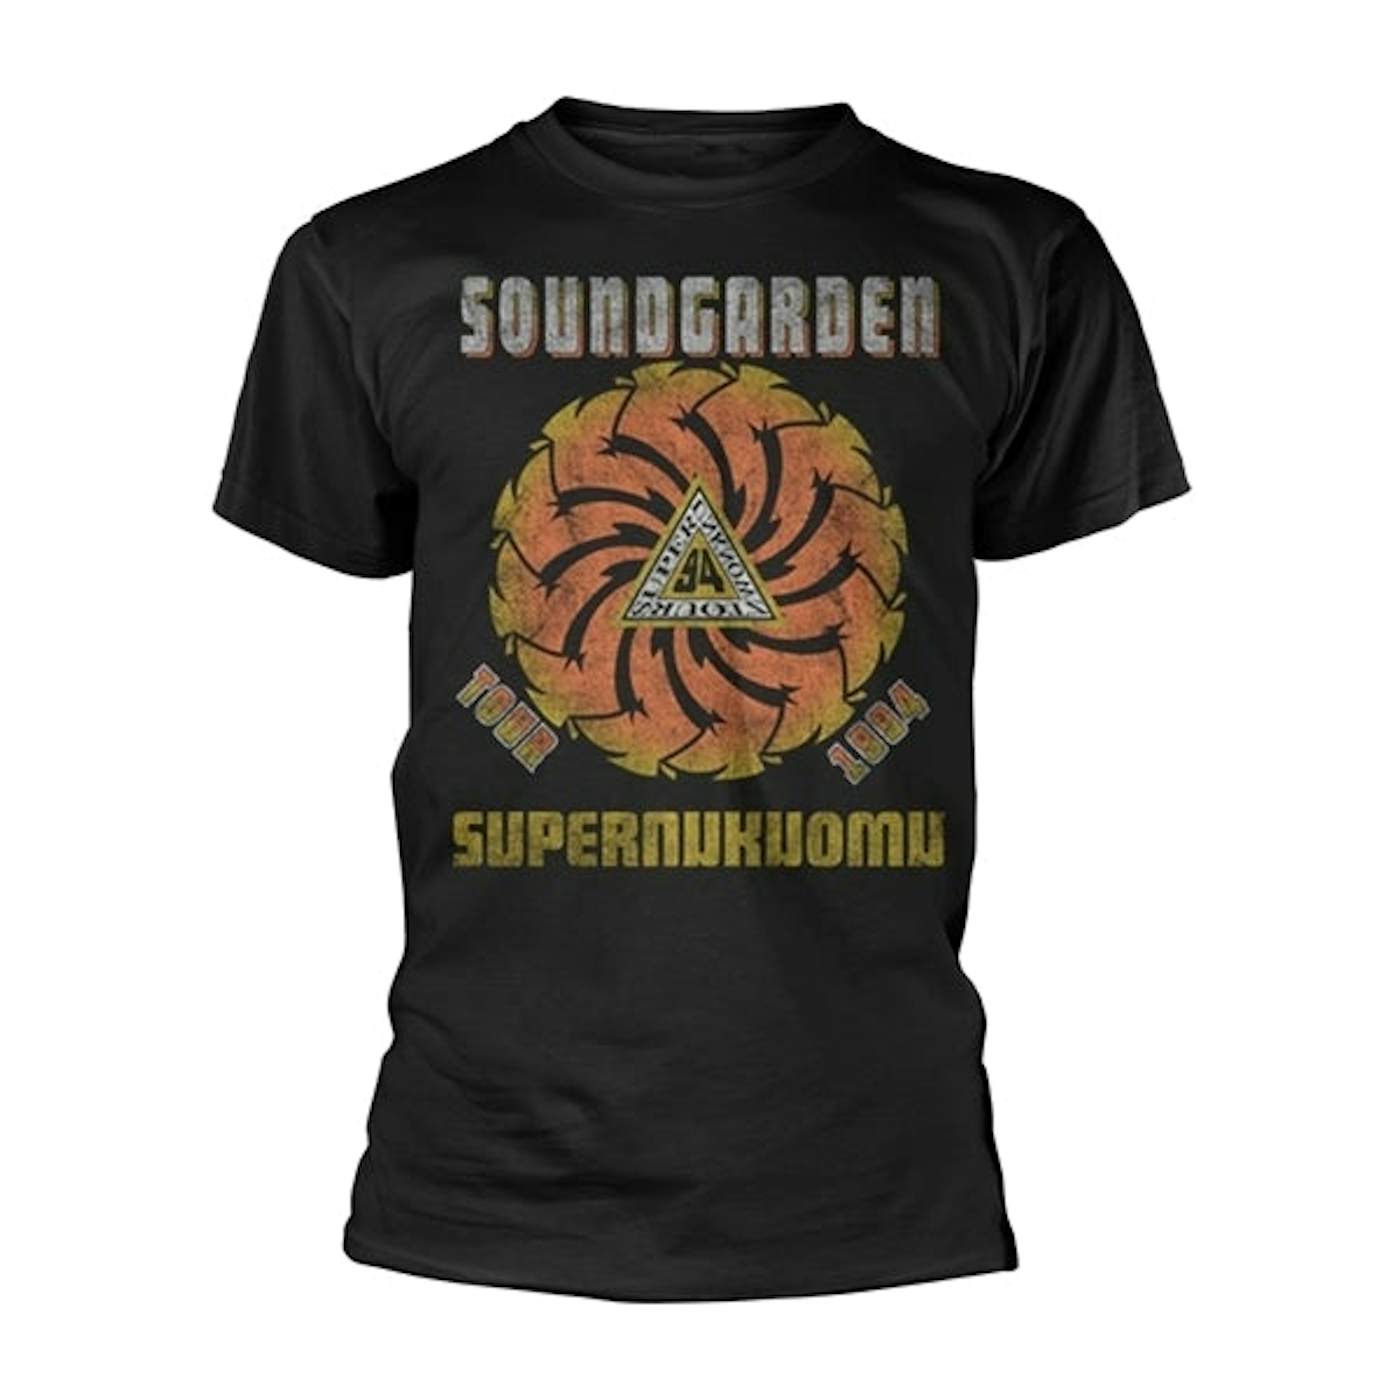 Soundgarden T-Shirt - Superunknown Tour 94